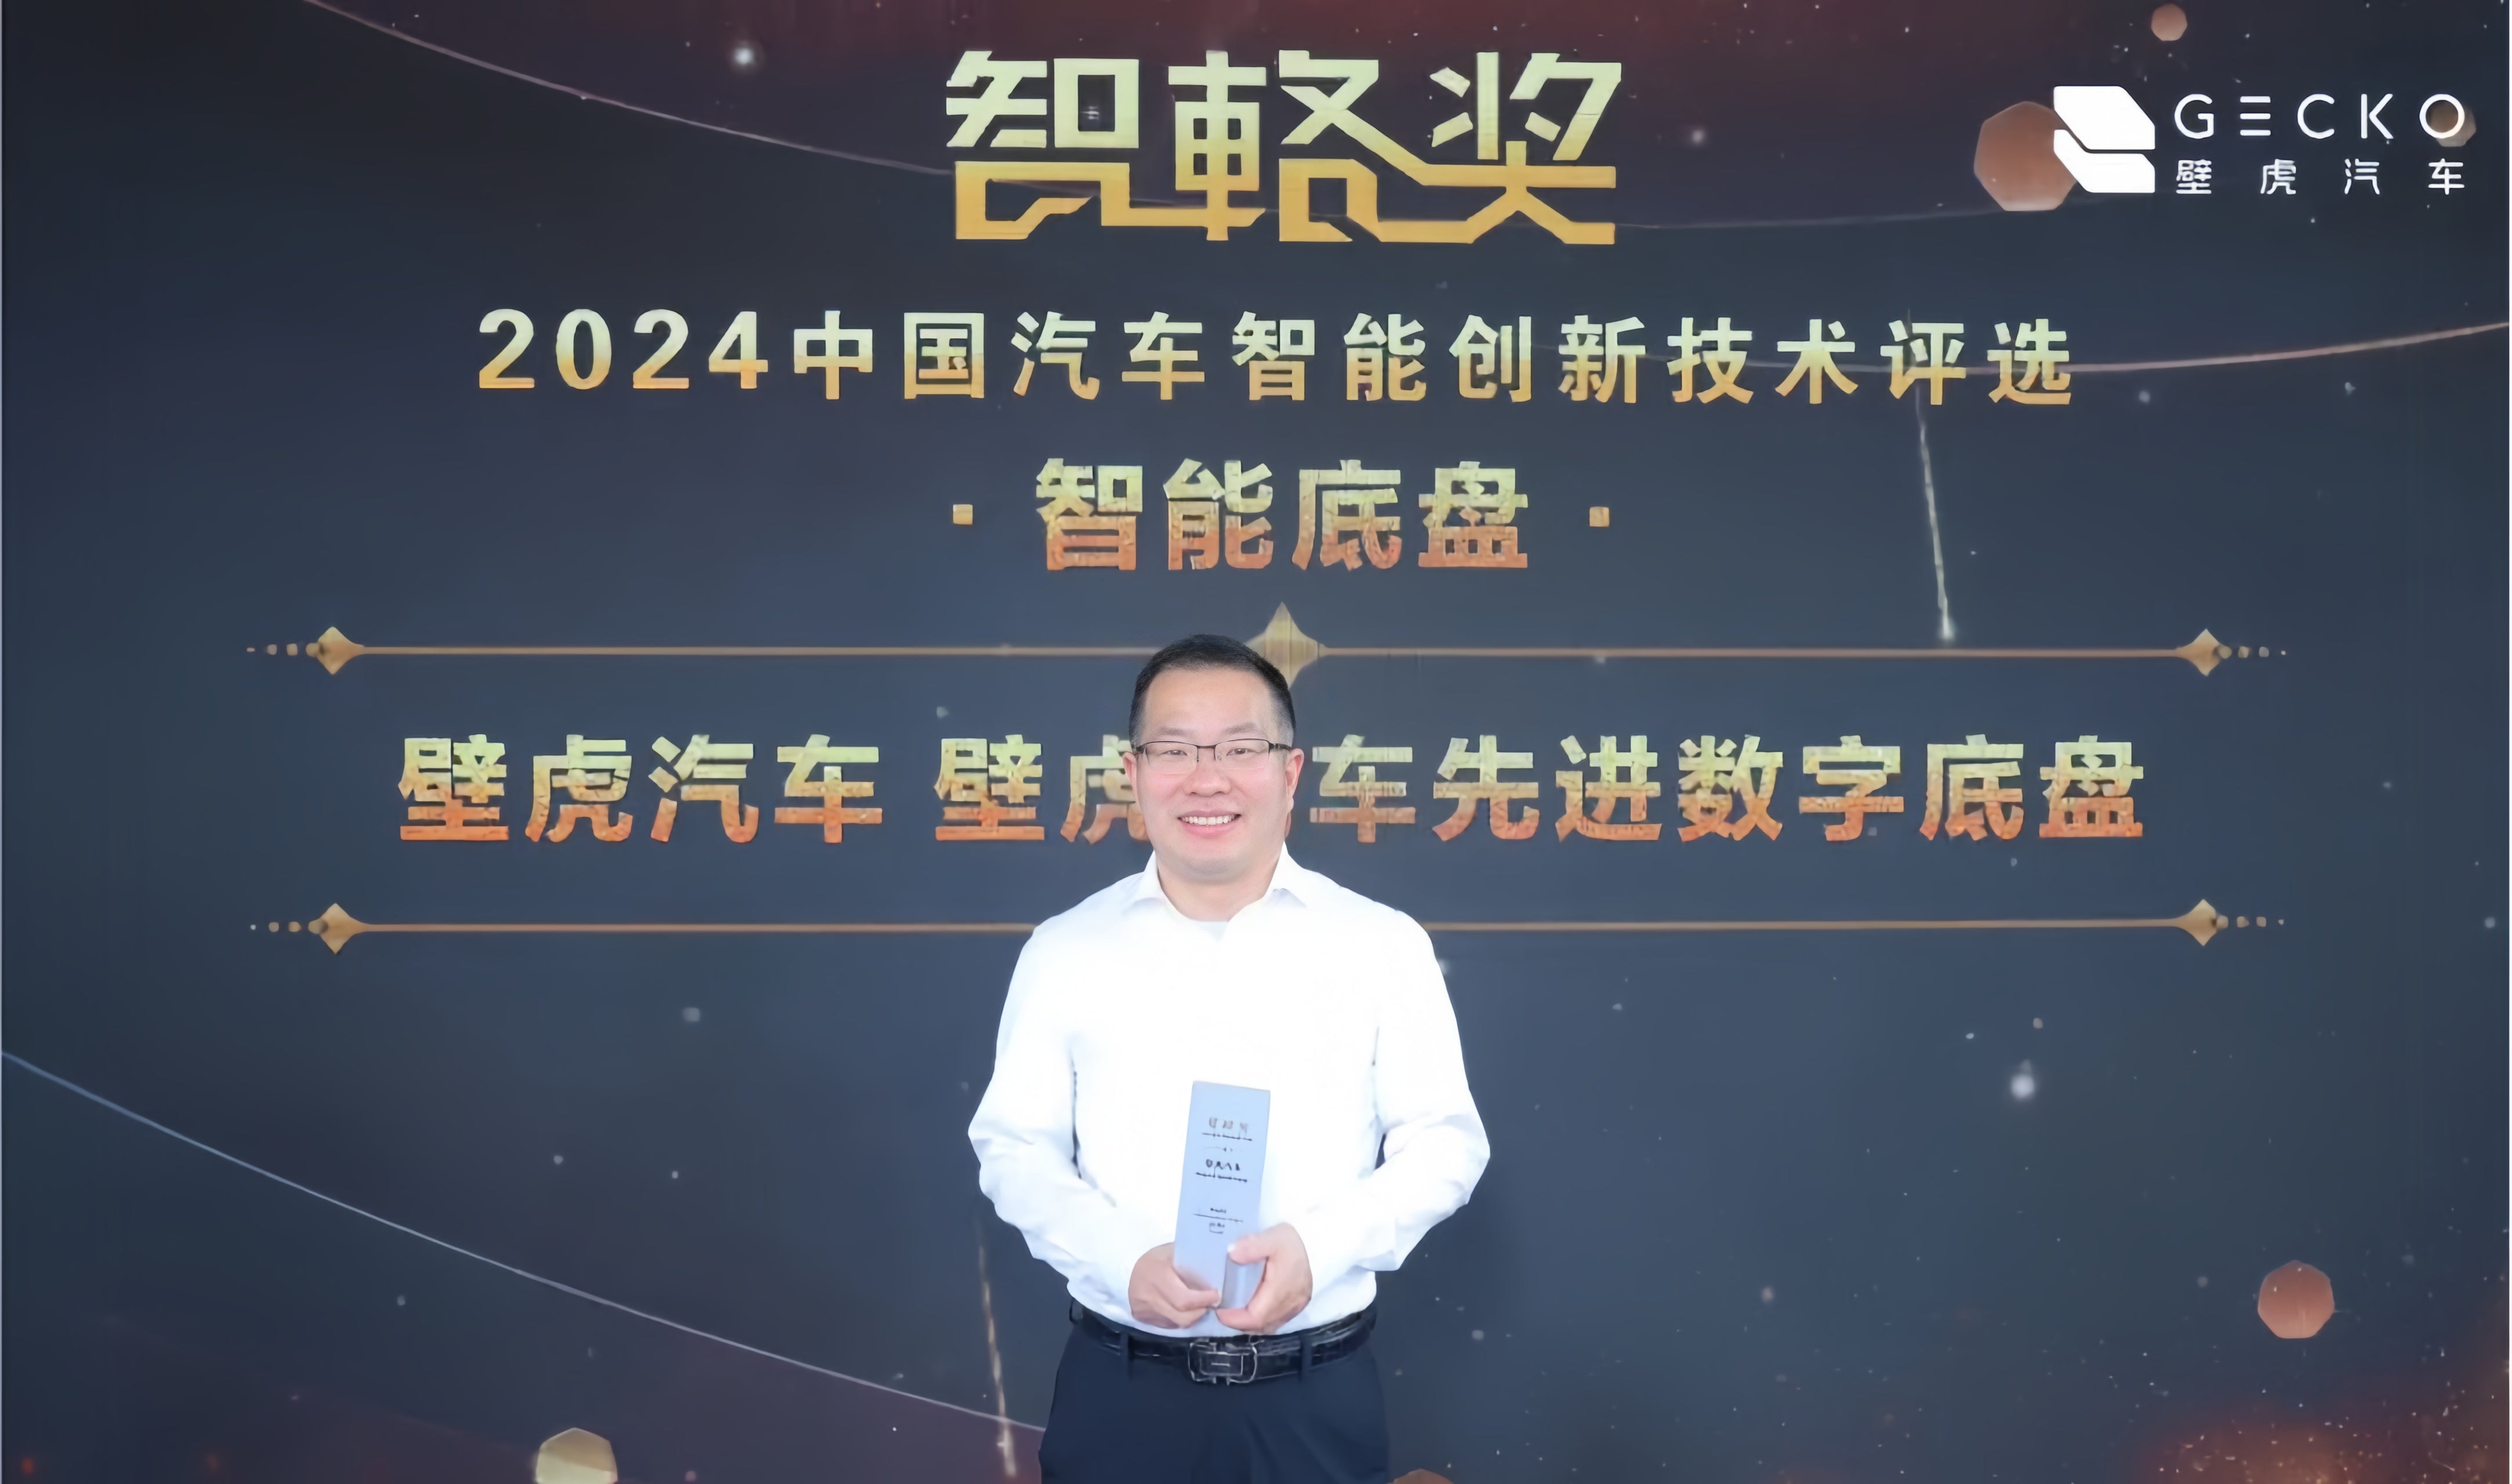 Innovation leads the future | Gecko Auto wins the Zhihui Award • 2024 China Automotive Intelligent Innovation Technology Selection Award